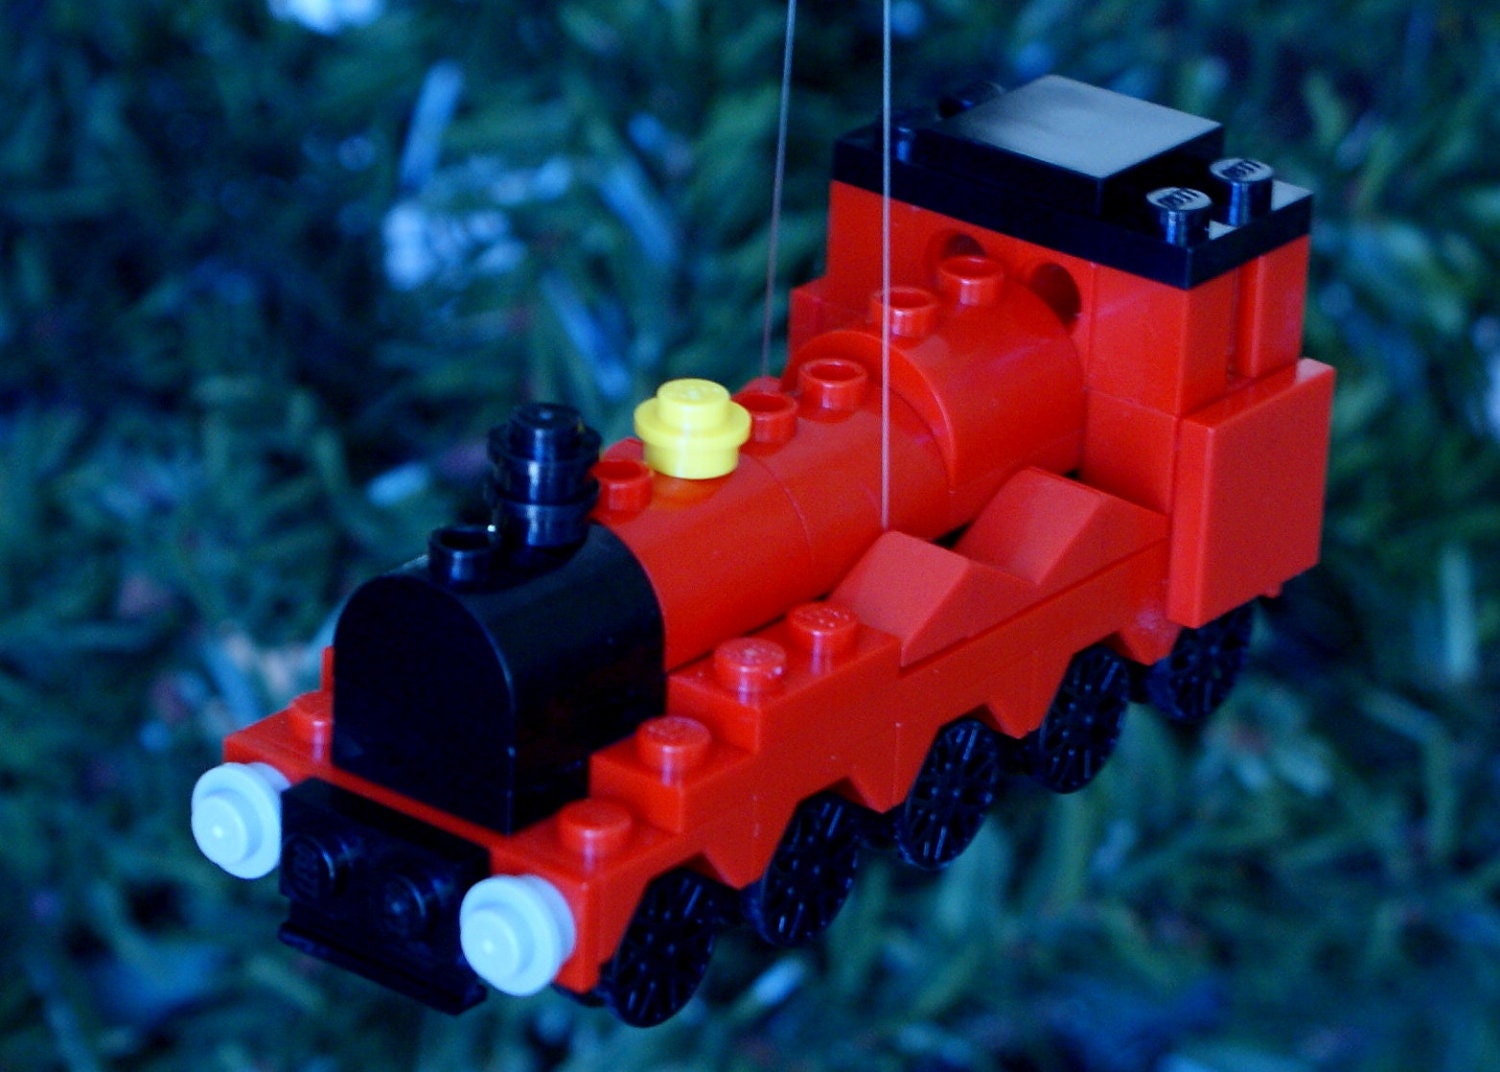 LEGO Harry Potter Hogwart's Express Christmas Ornament - ornaments4charity